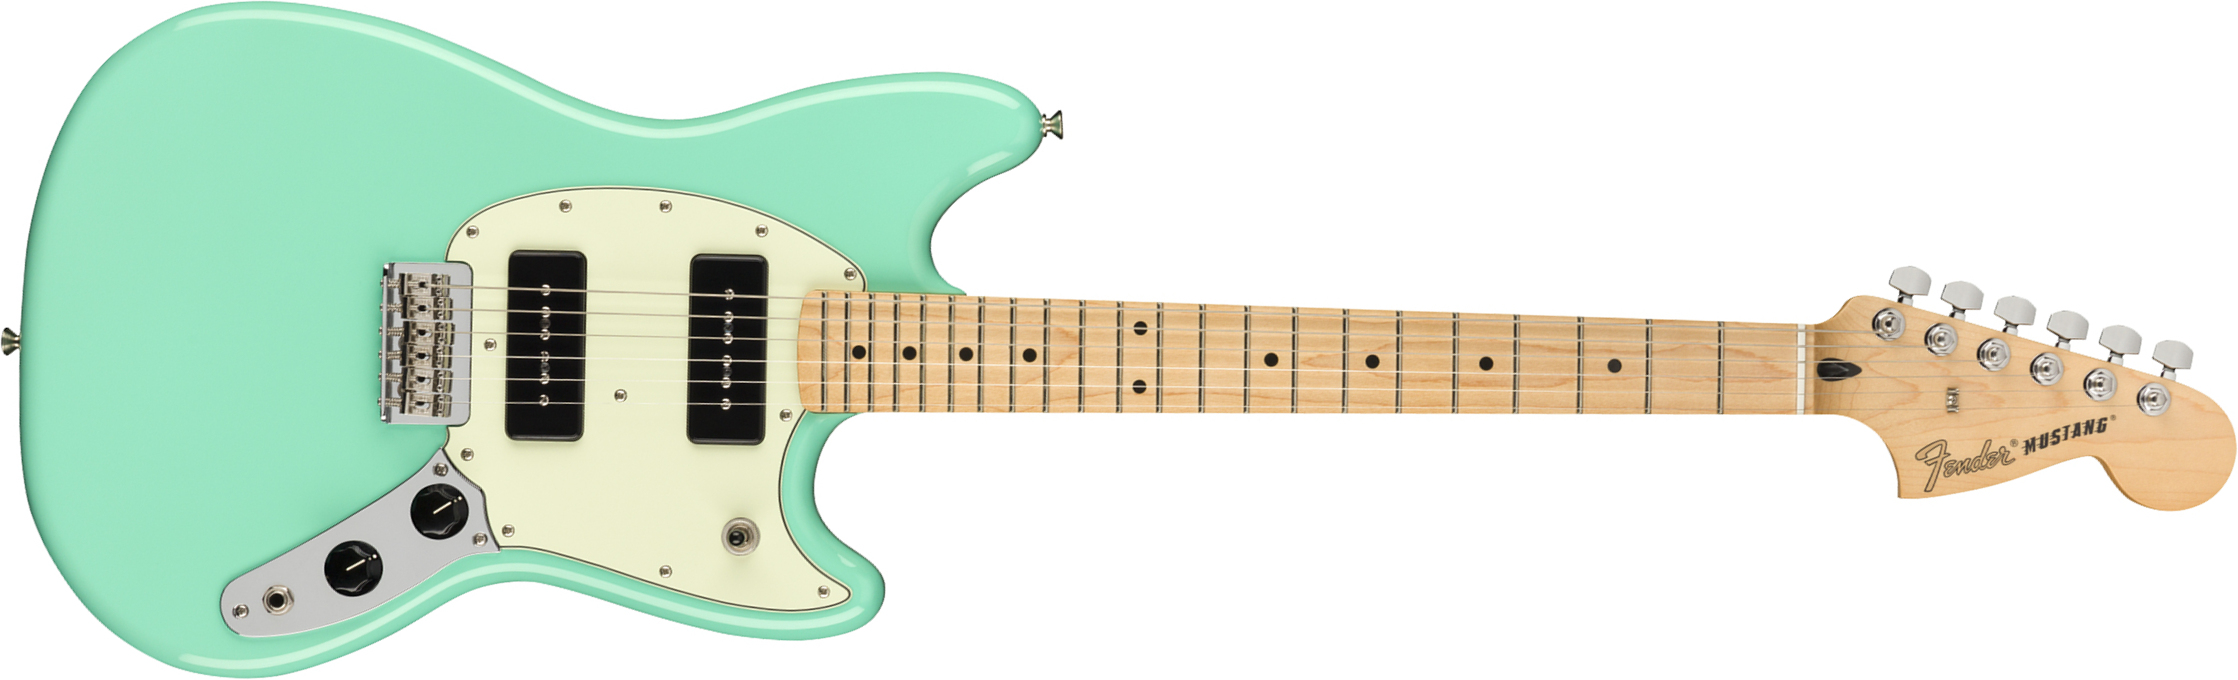 Fender Mustang Player 90 Mex Ht 2p90 Mn - Seafoam Green - Retro-Rock-E-Gitarre - Main picture